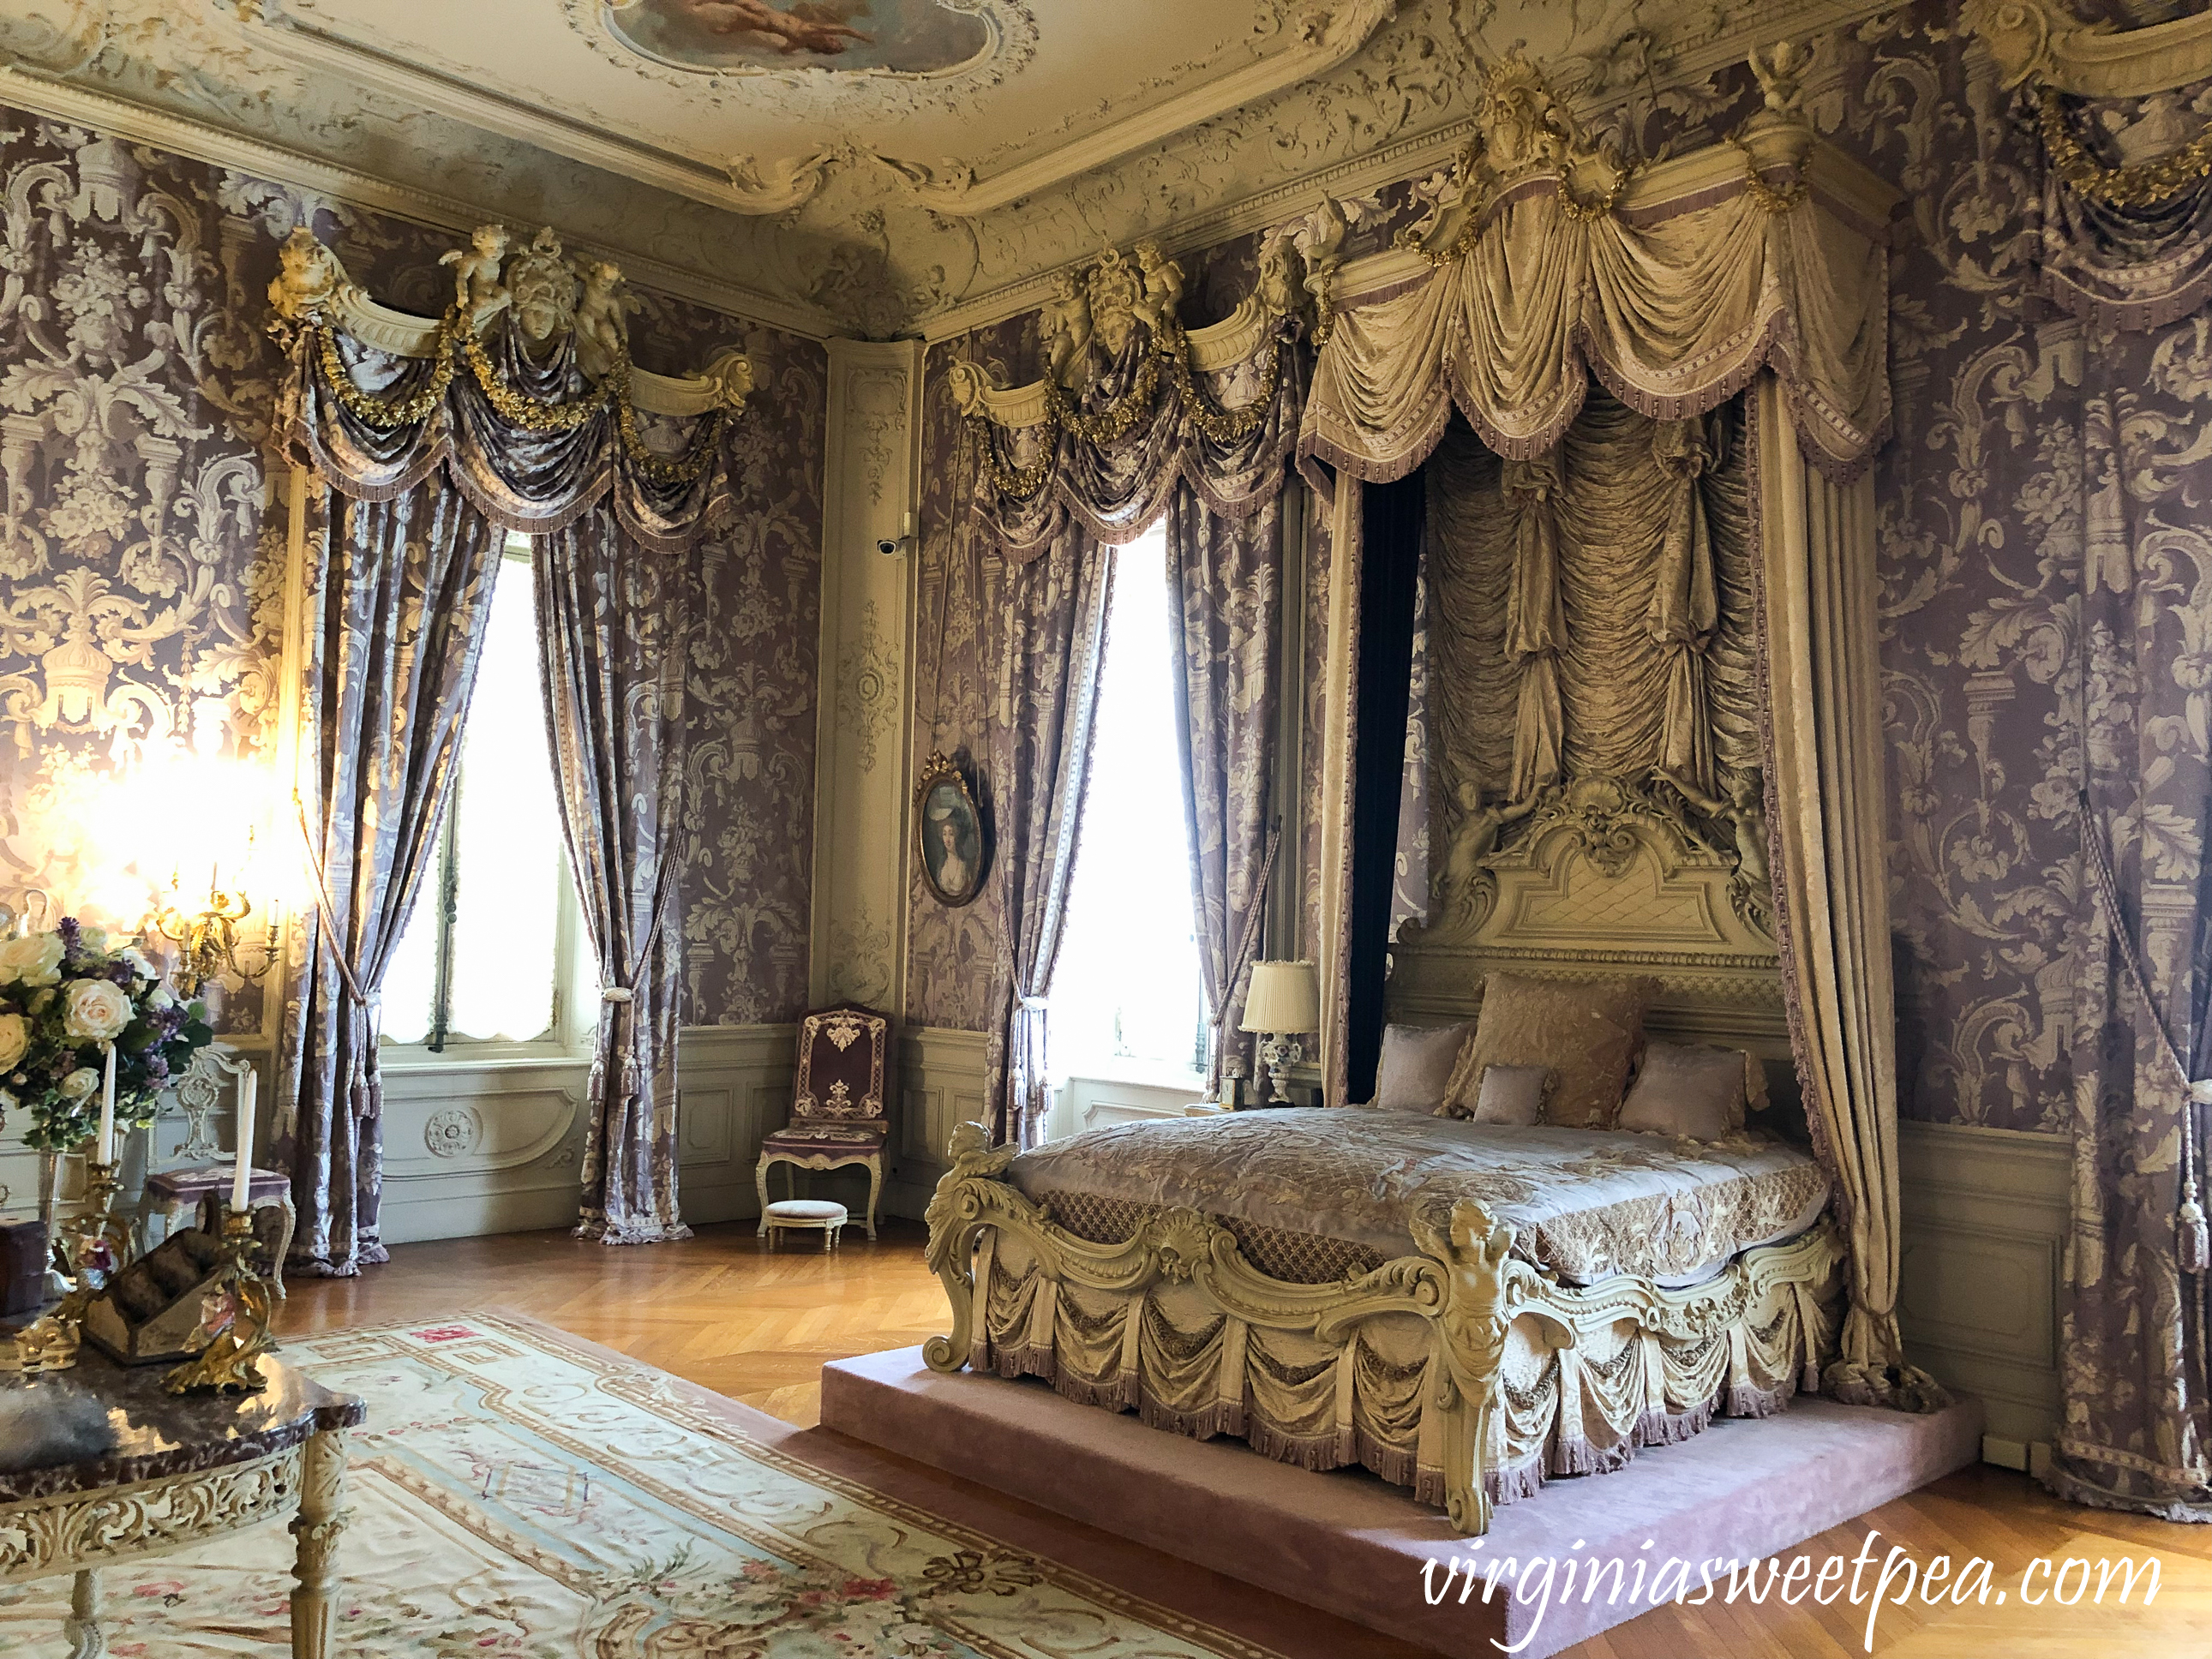 Alva Vanderbilt's bedroom at Marble House